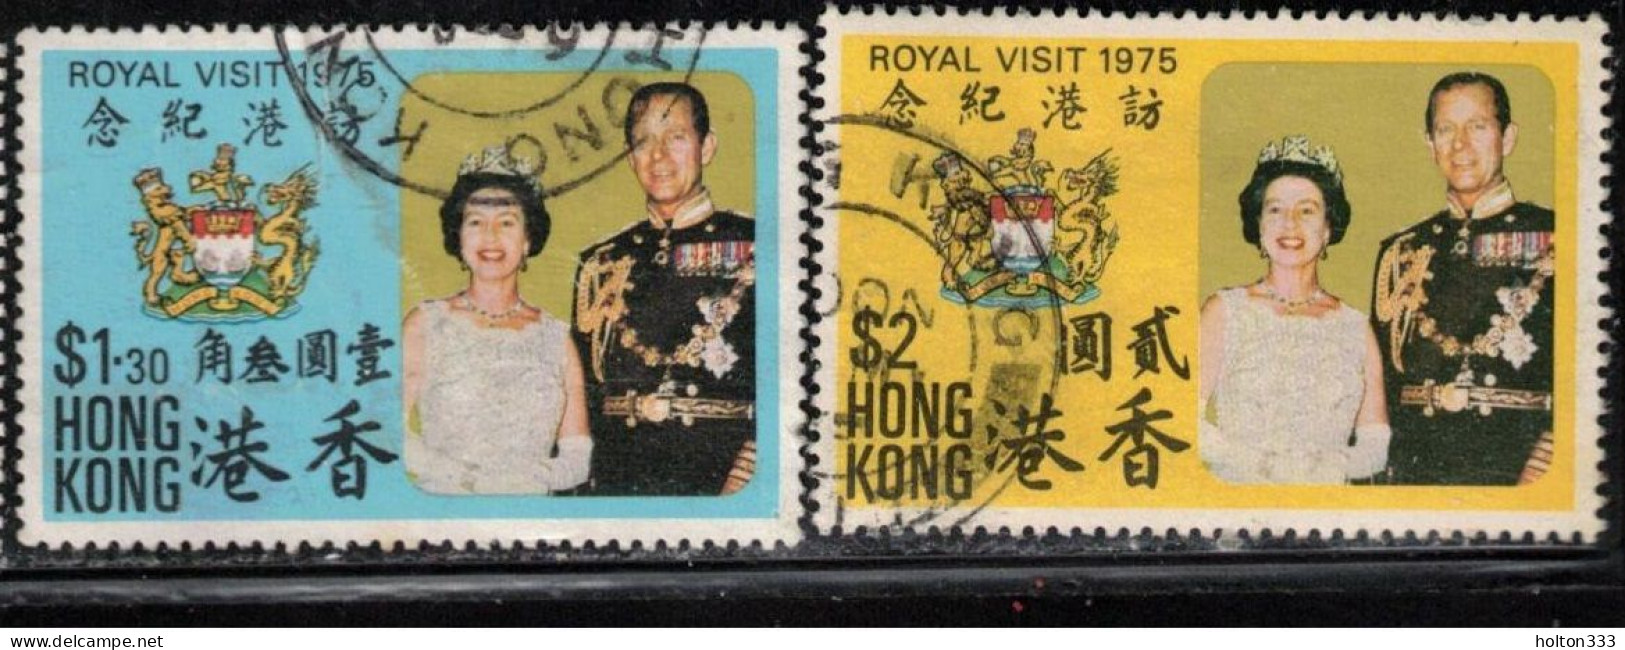 HONG KONG Scott # 304-5 Used - Royal Visit 1975 - Usati